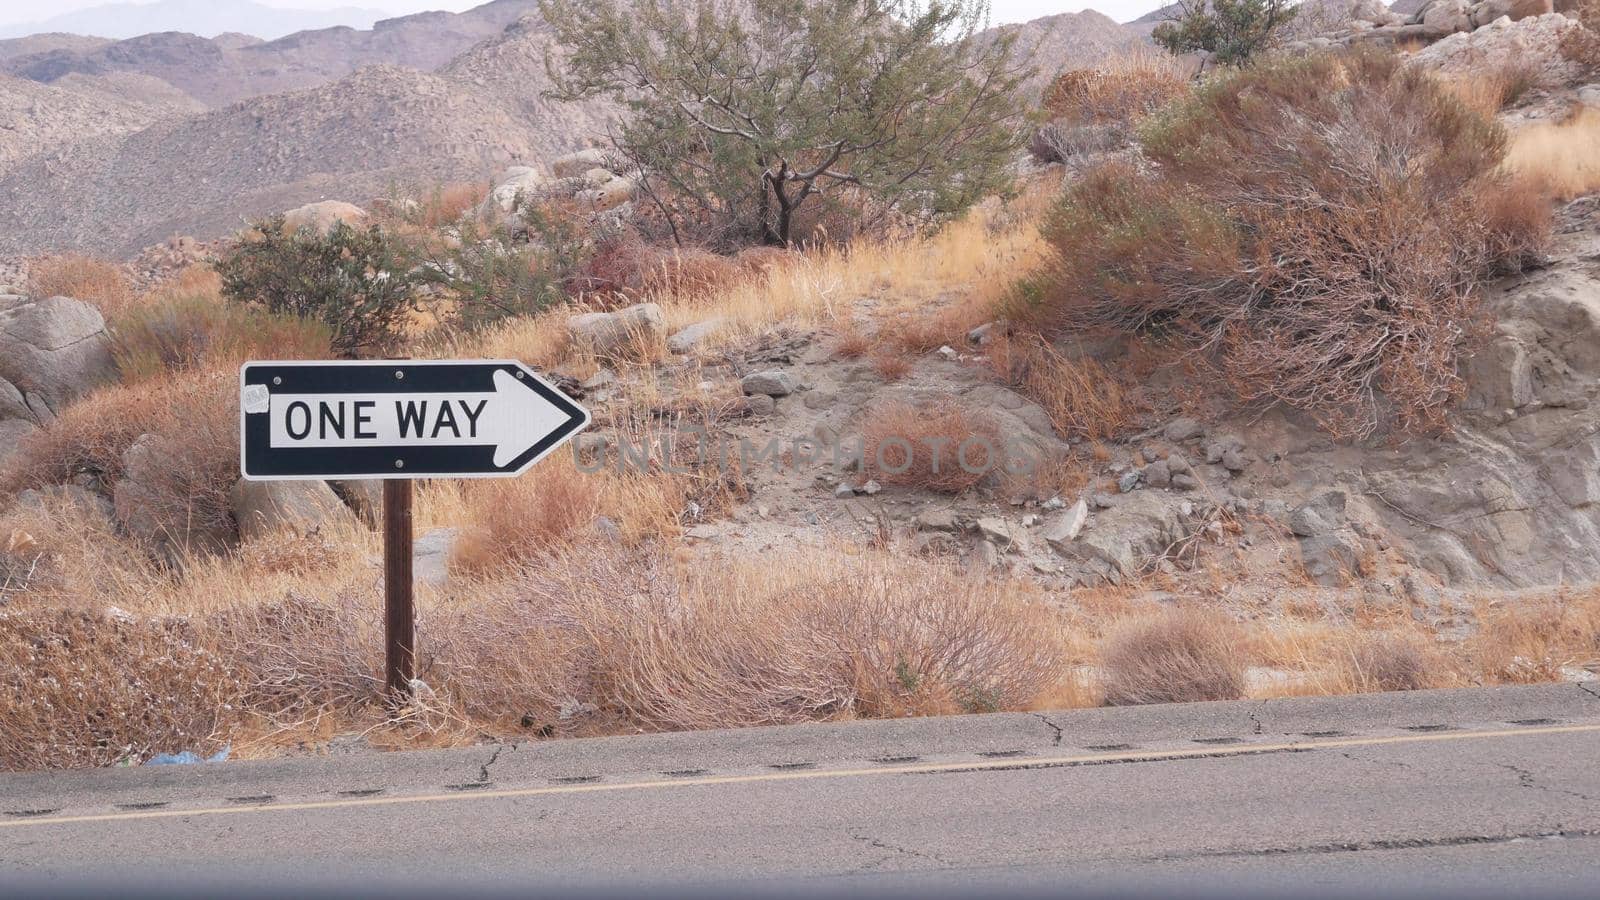 One way road sign arrow, highway roadside in California, USA road trip in desert by DogoraSun